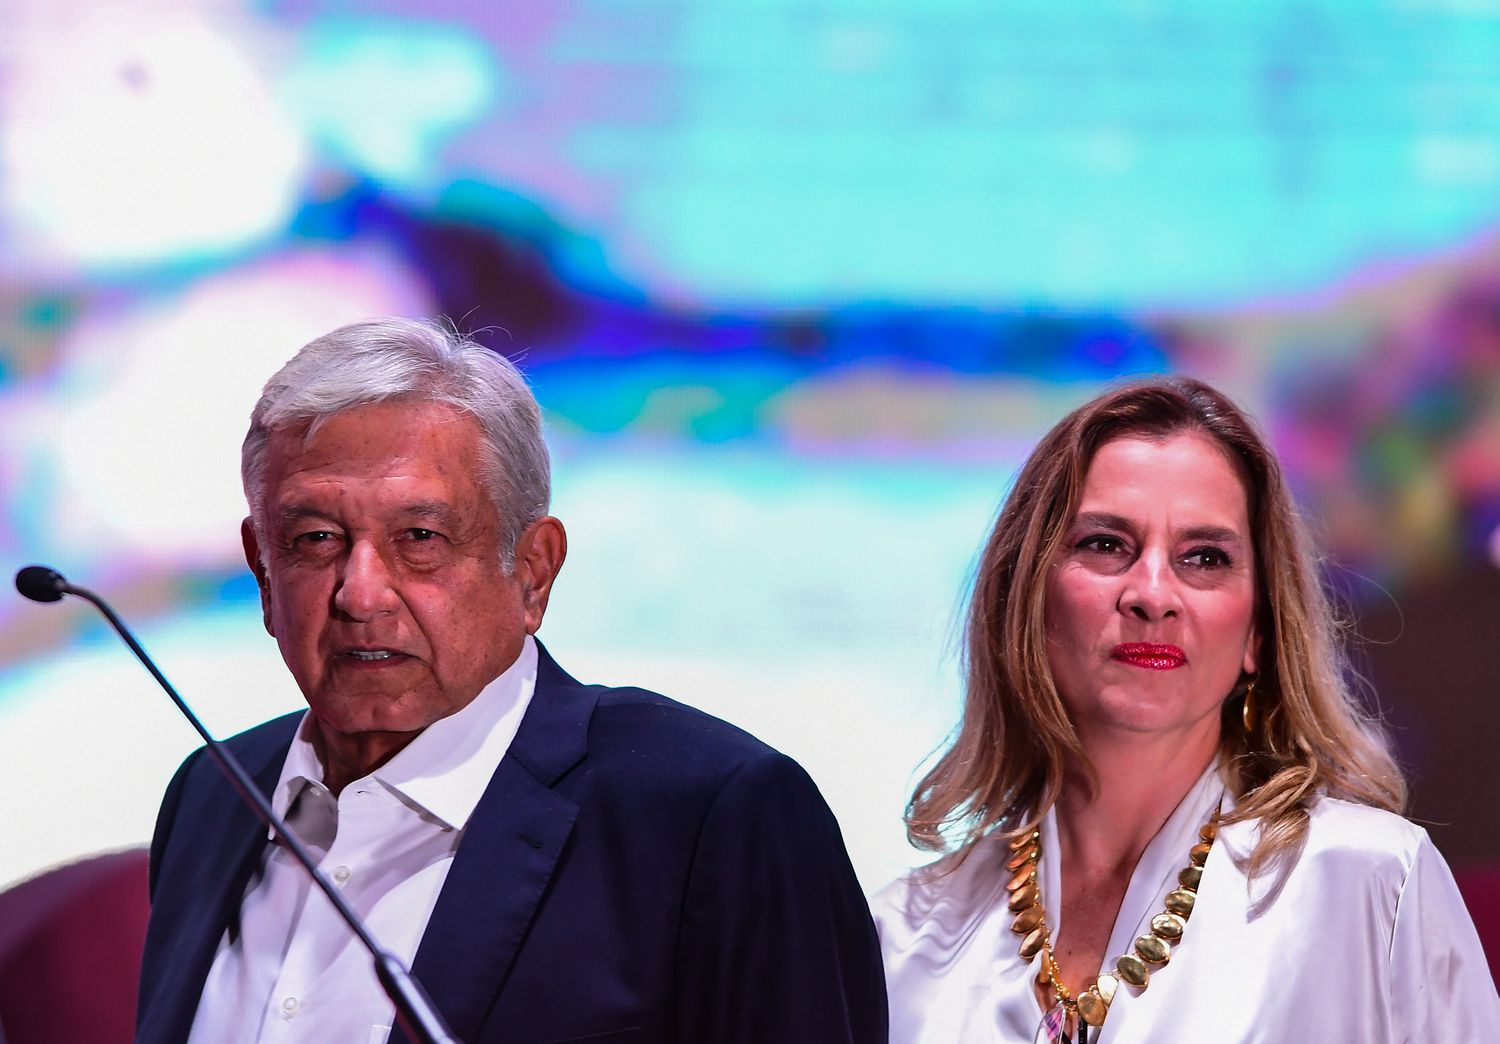 Andr&eacute;s Manuel L&oacute;pez Obrador